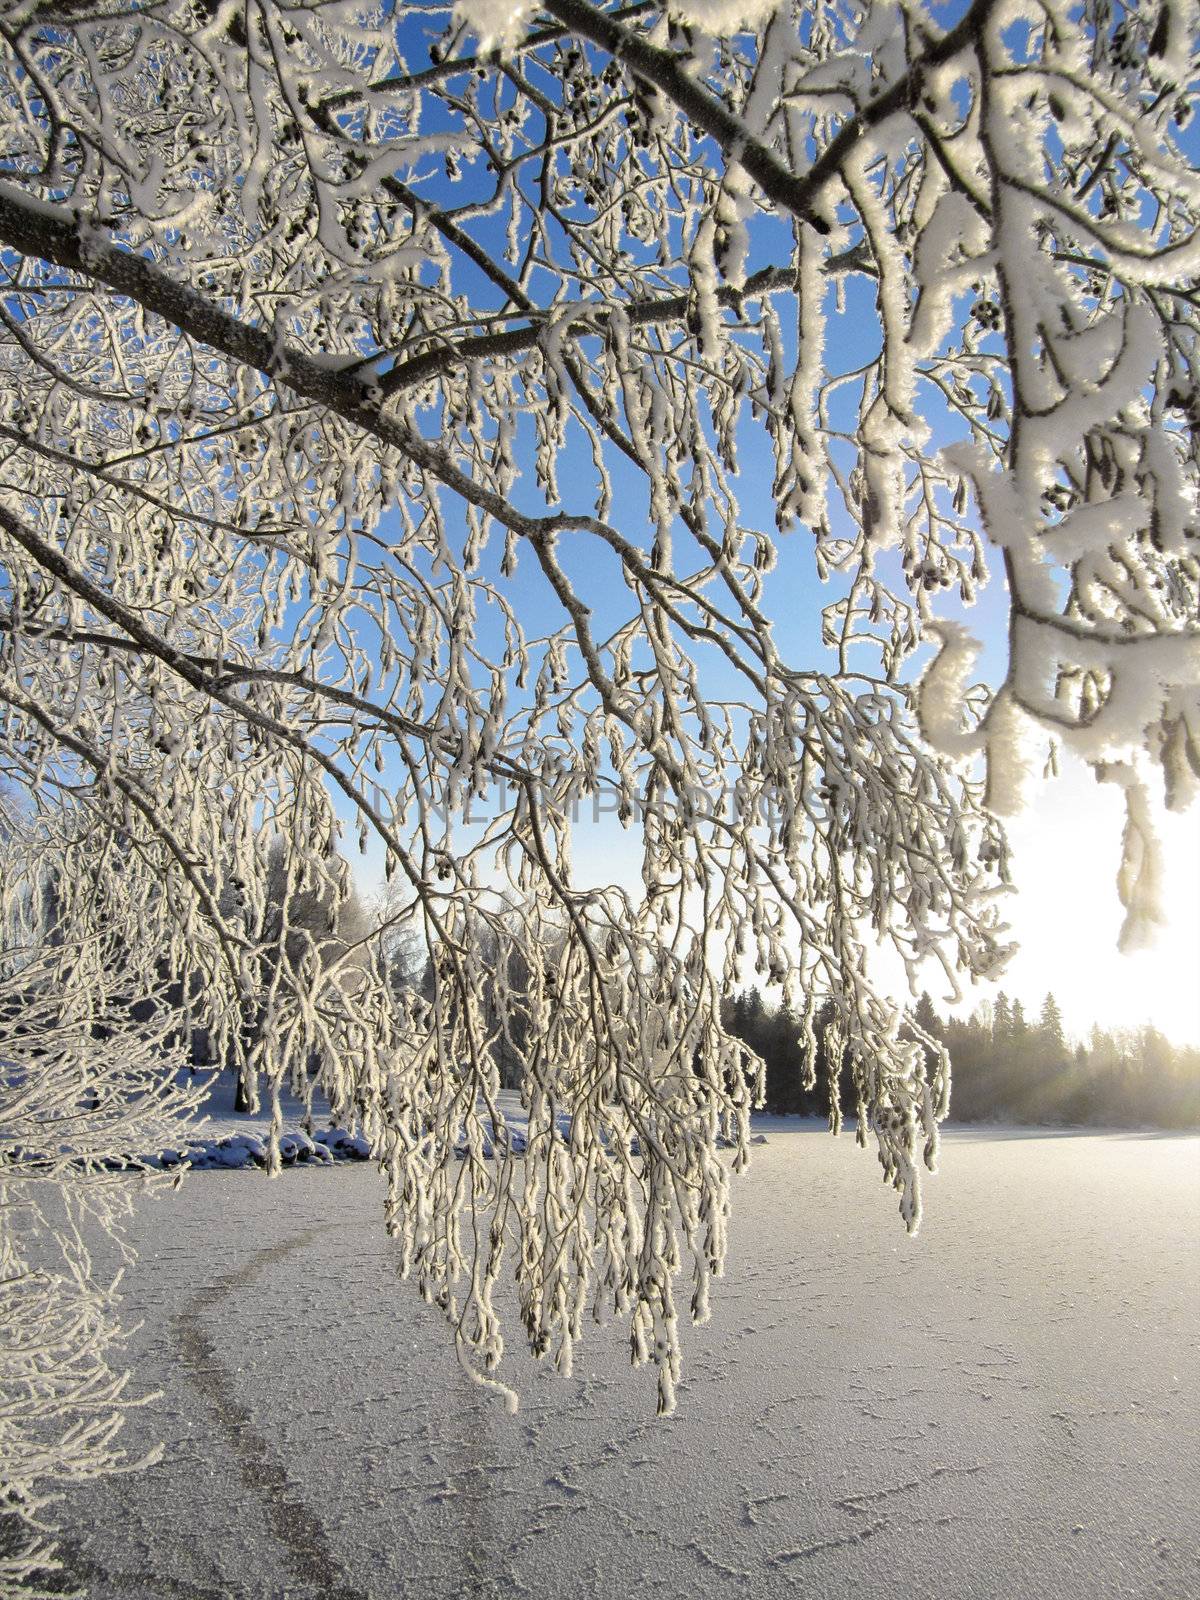 Winter snowy branches by anterovium